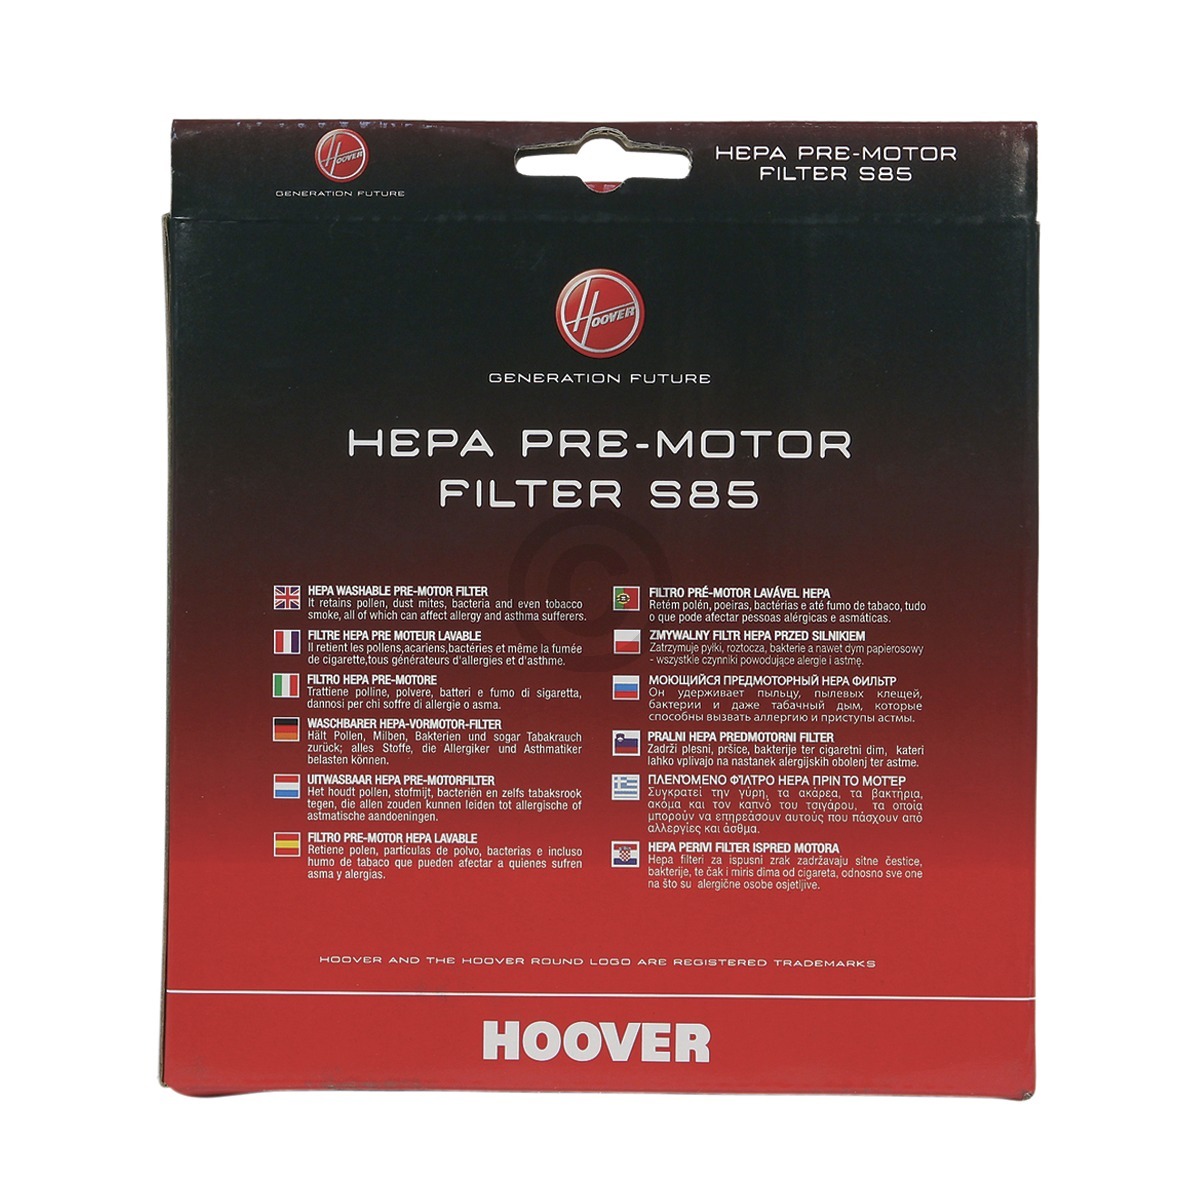 Filter Motorschutzfilter Kassette Hoover 35600566 S85 für Staubsauger